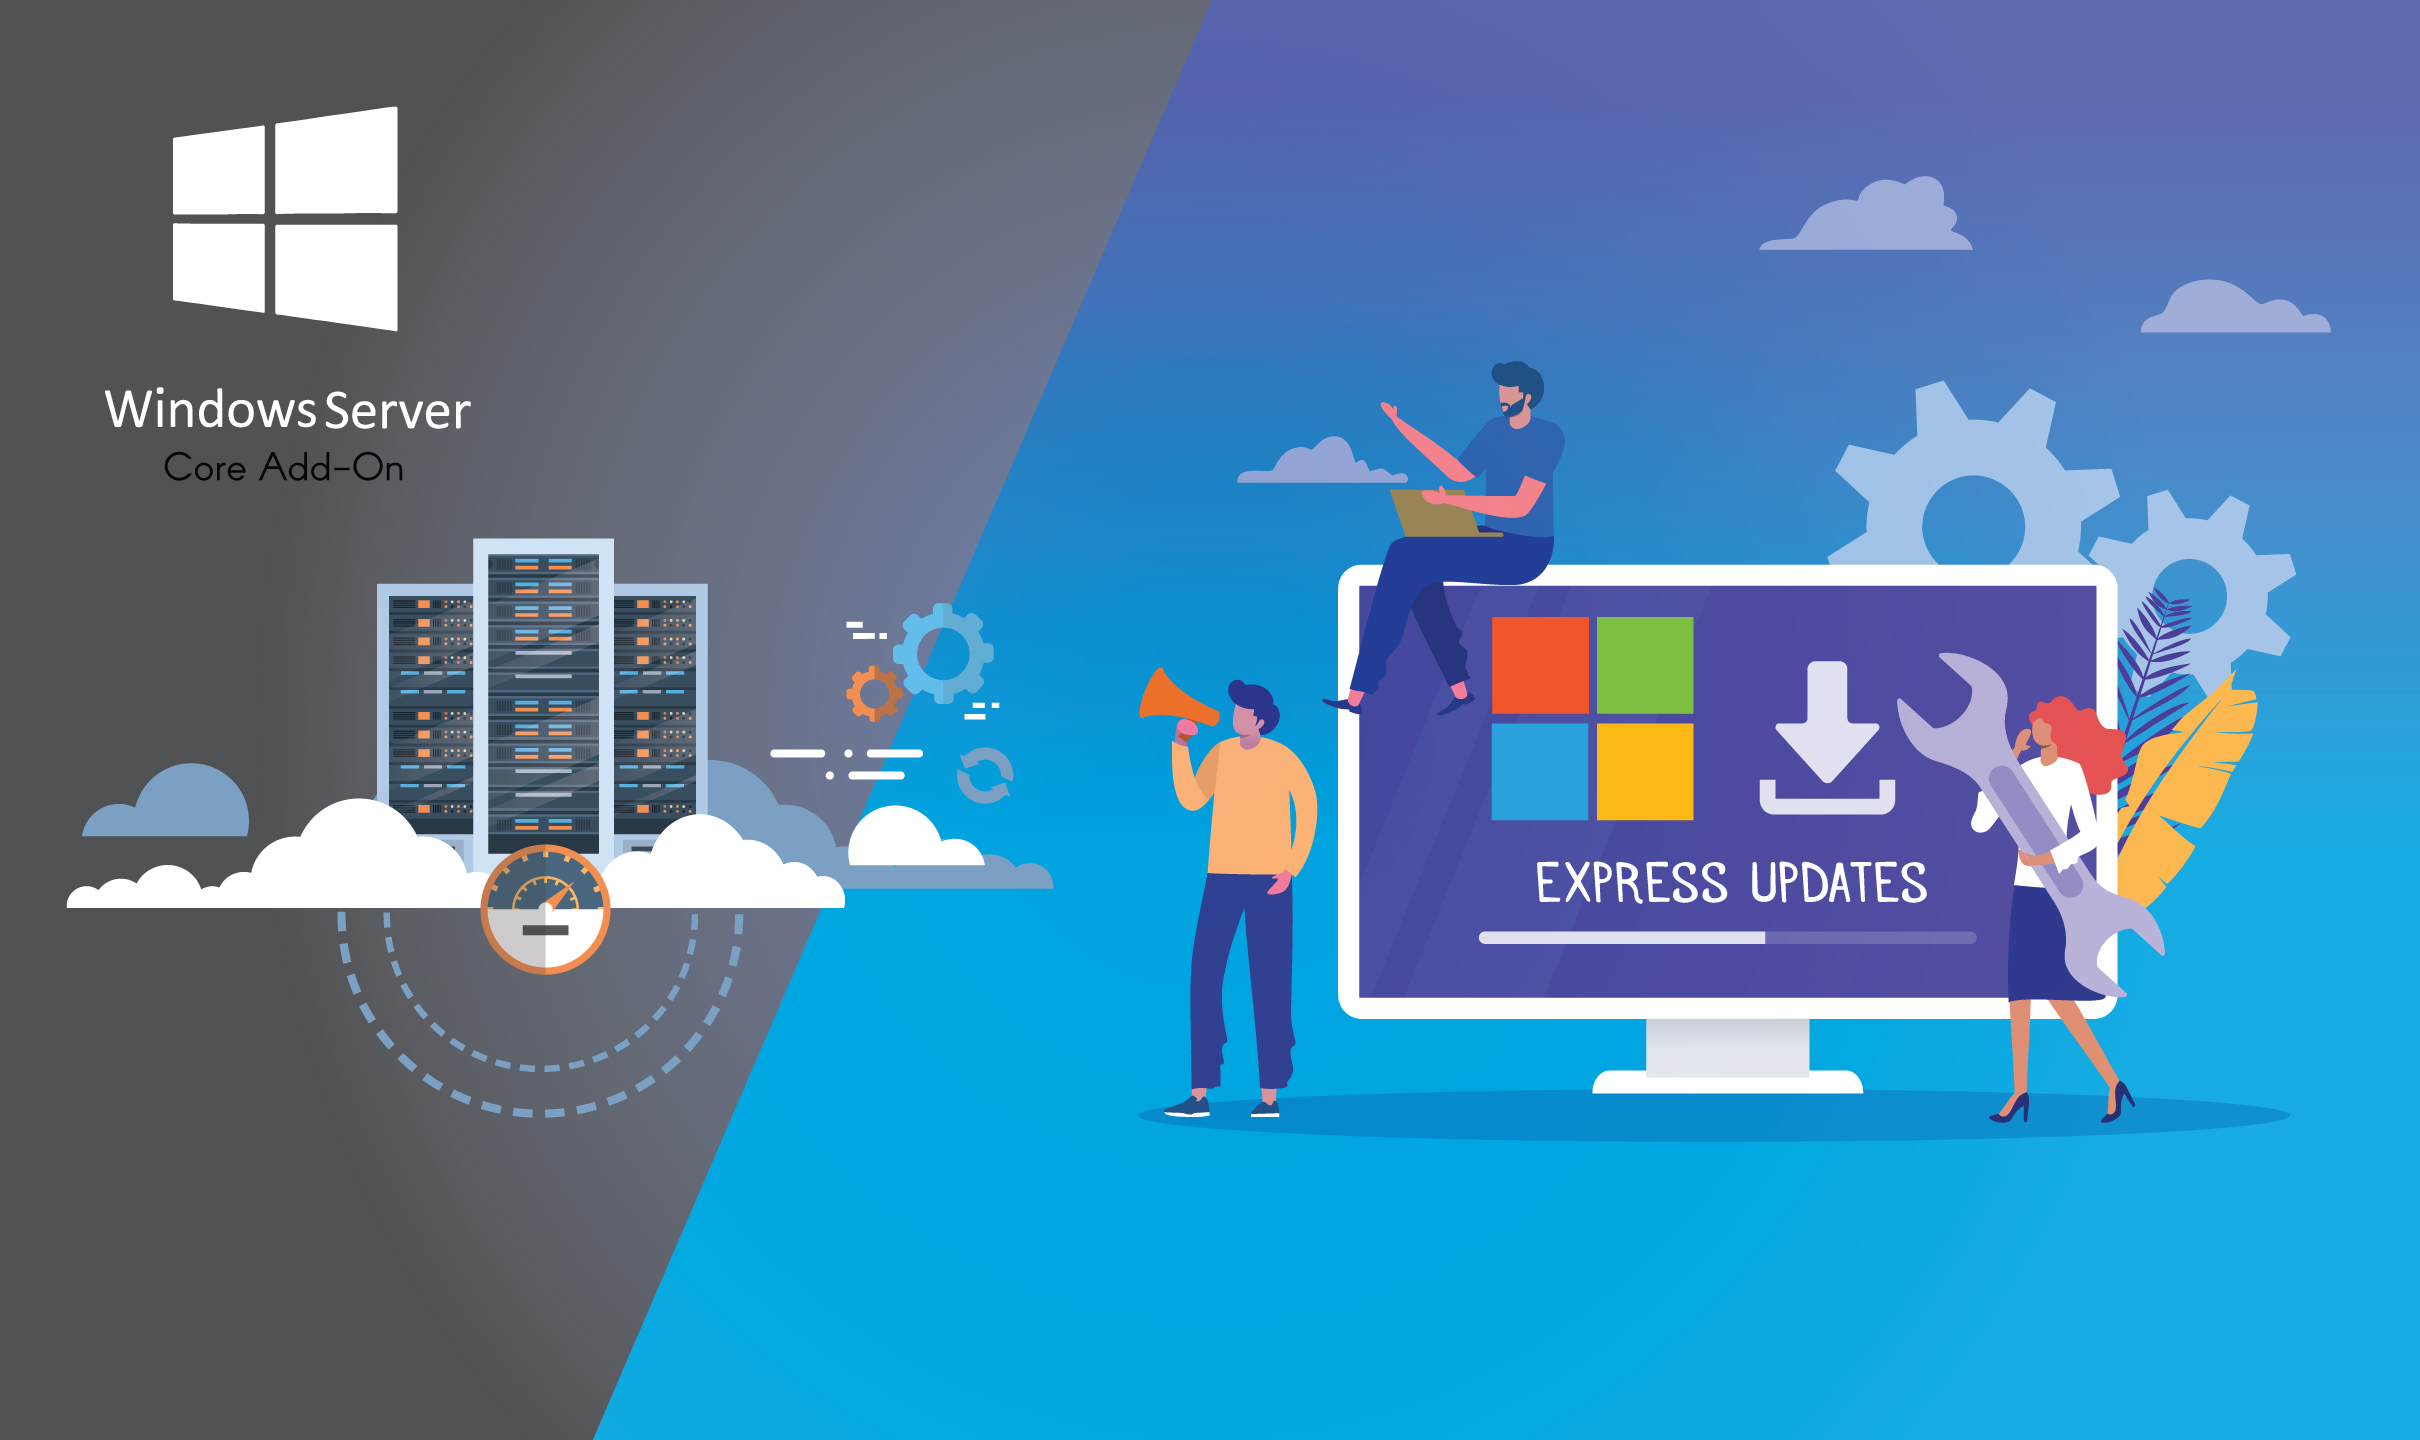 Install Windows Server 2019 Standard Core Add-On